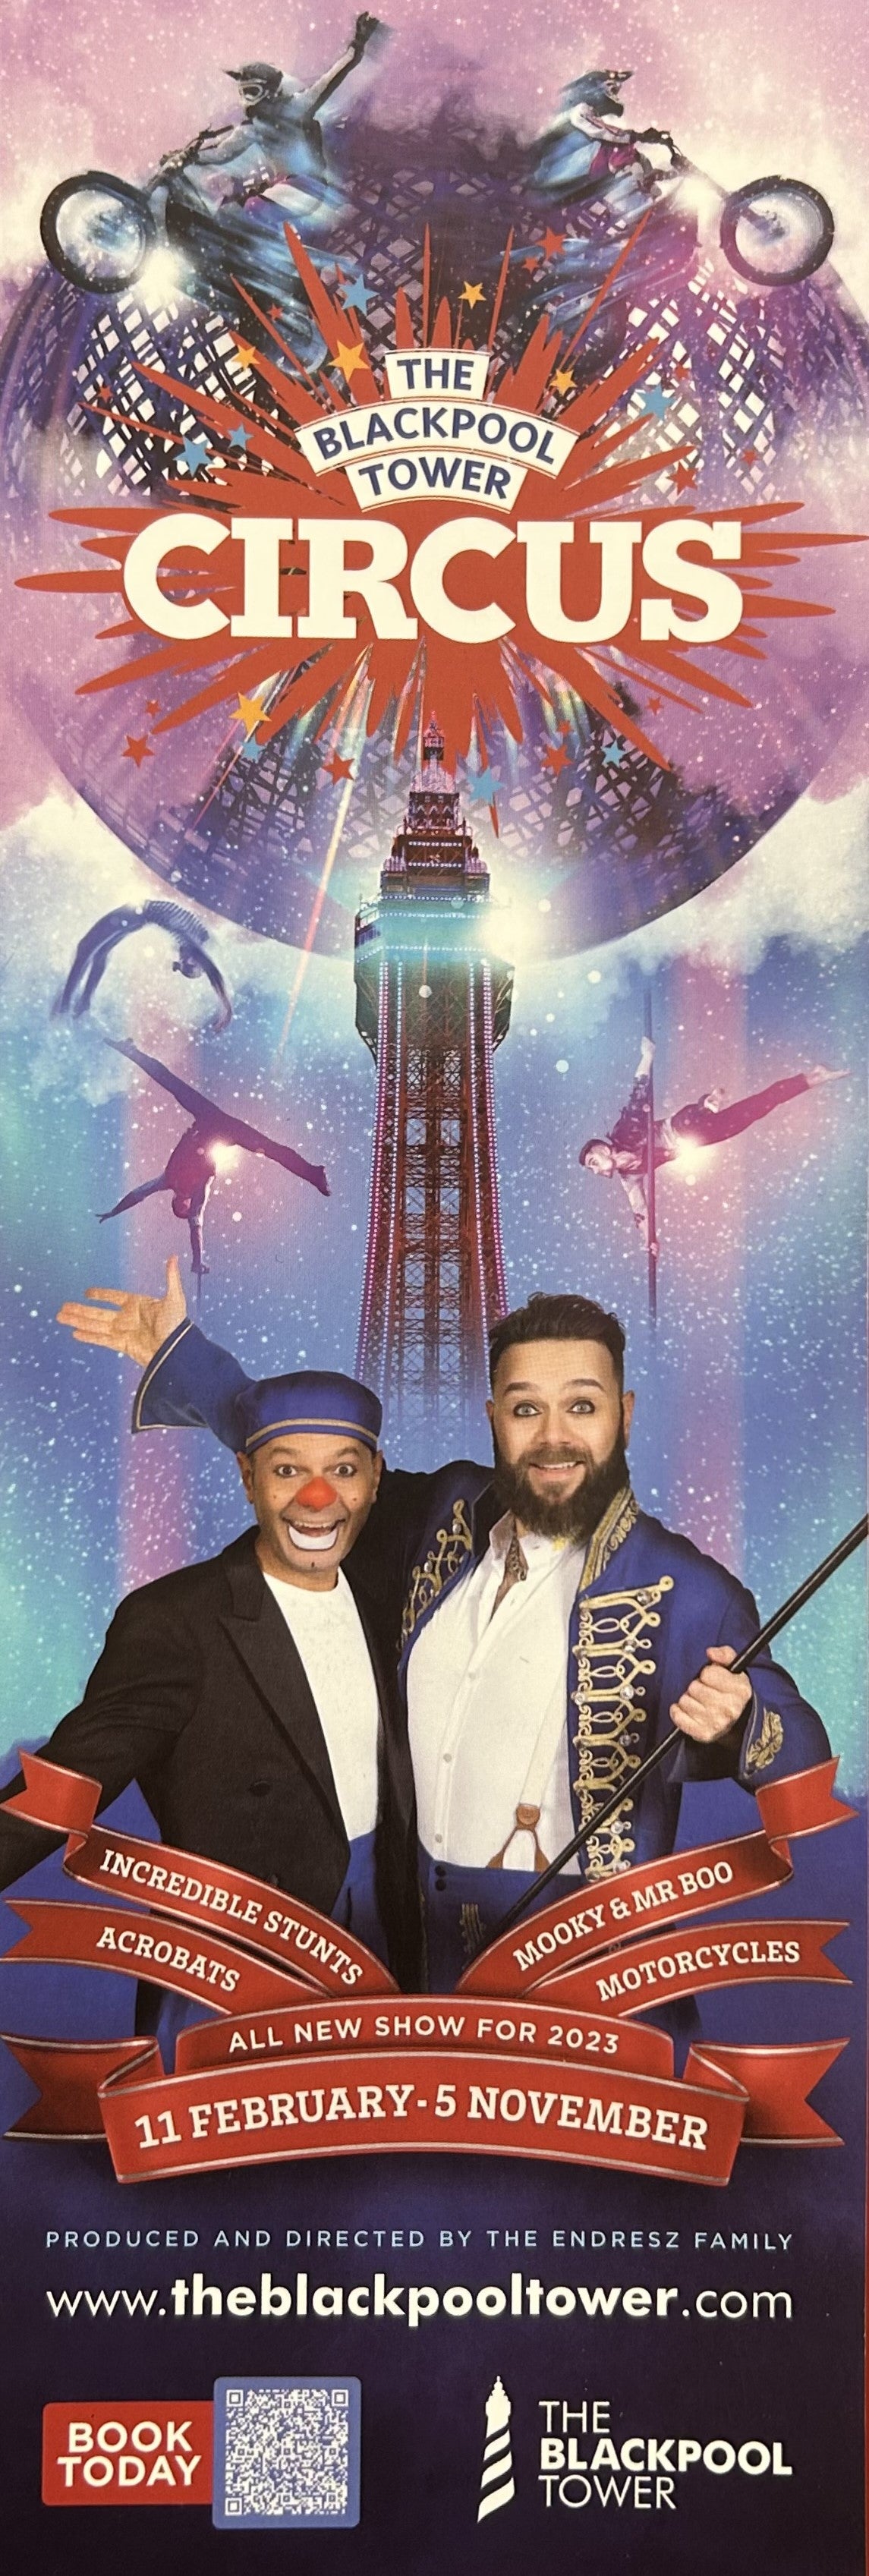 The Blackpool Tower Circus 2023